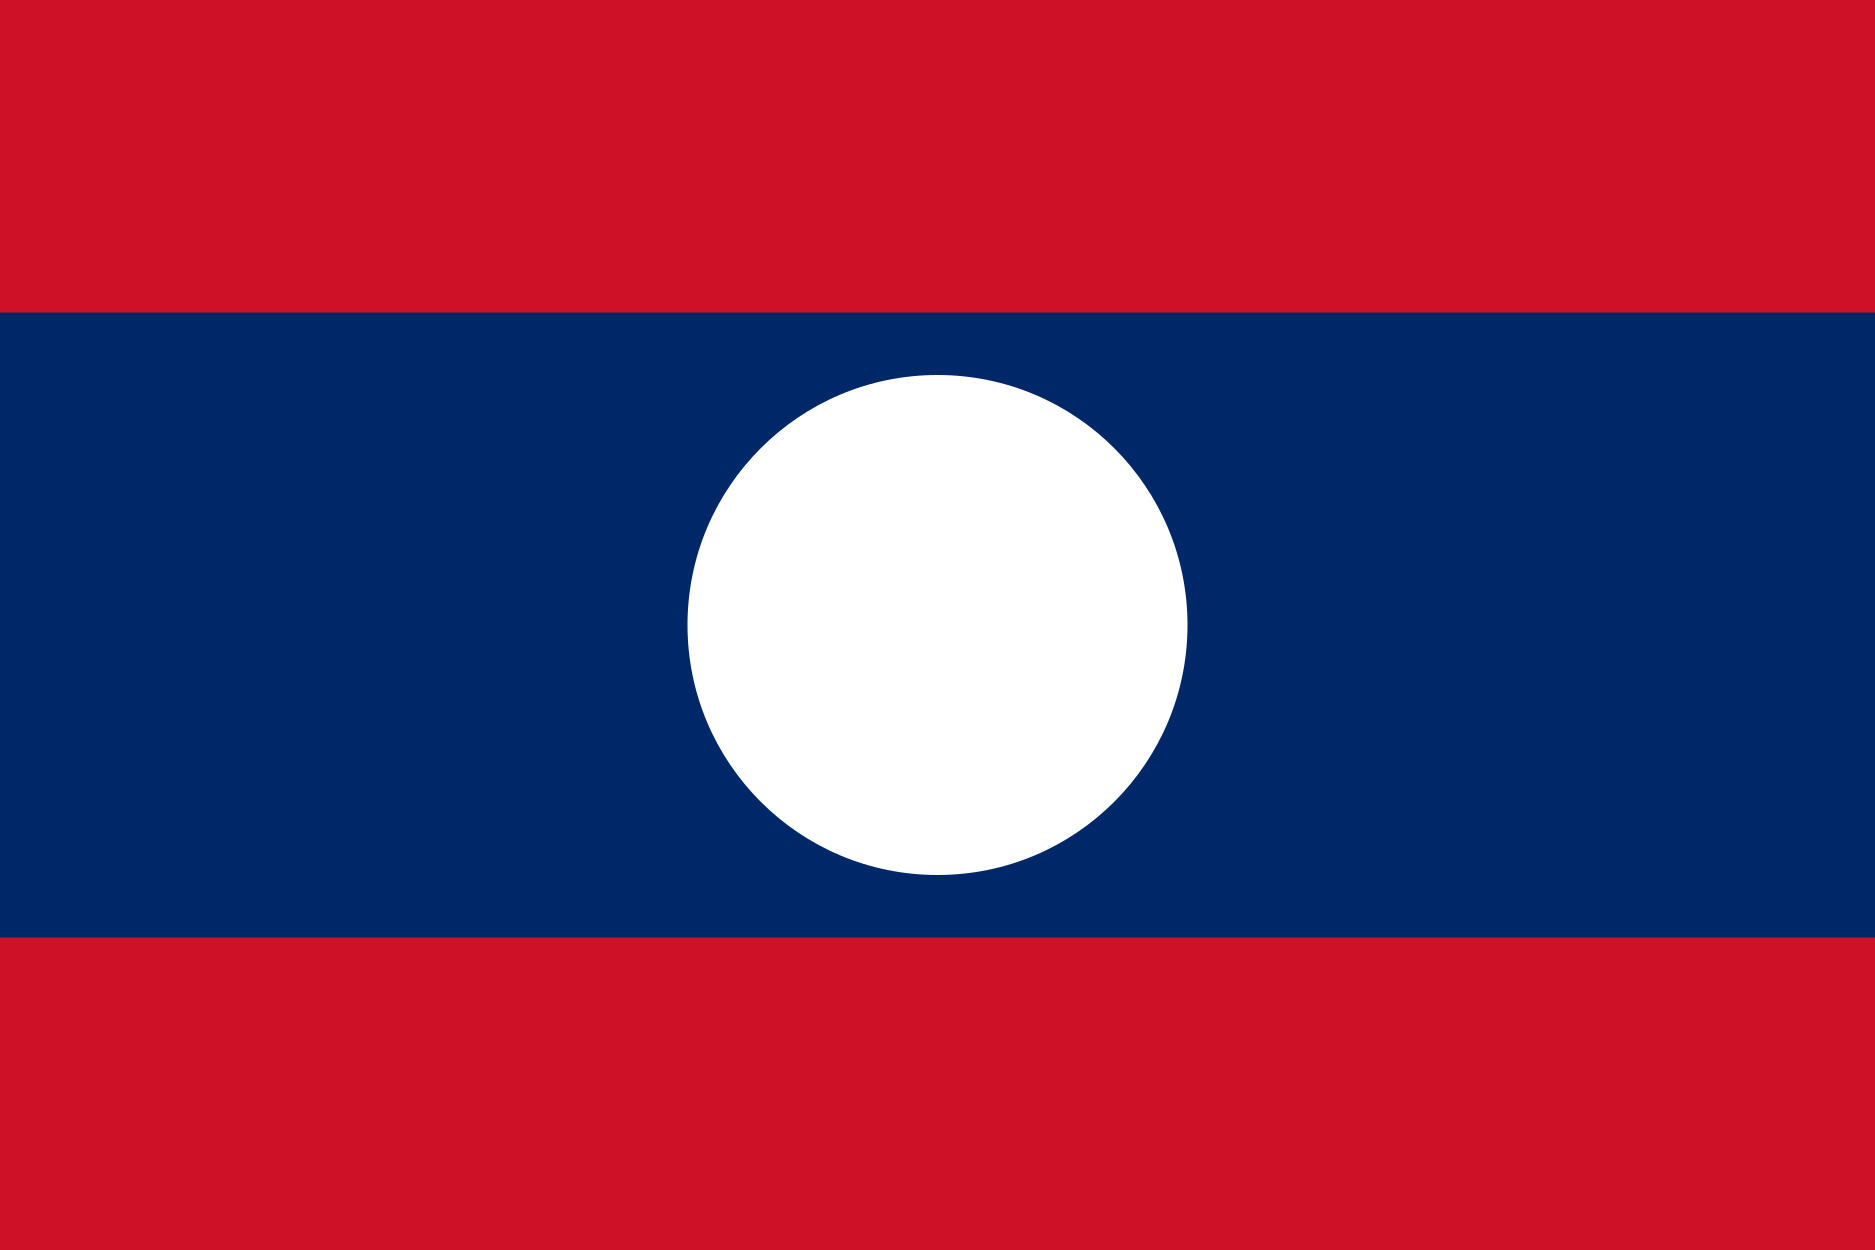 Laos Flag Image - Free Download